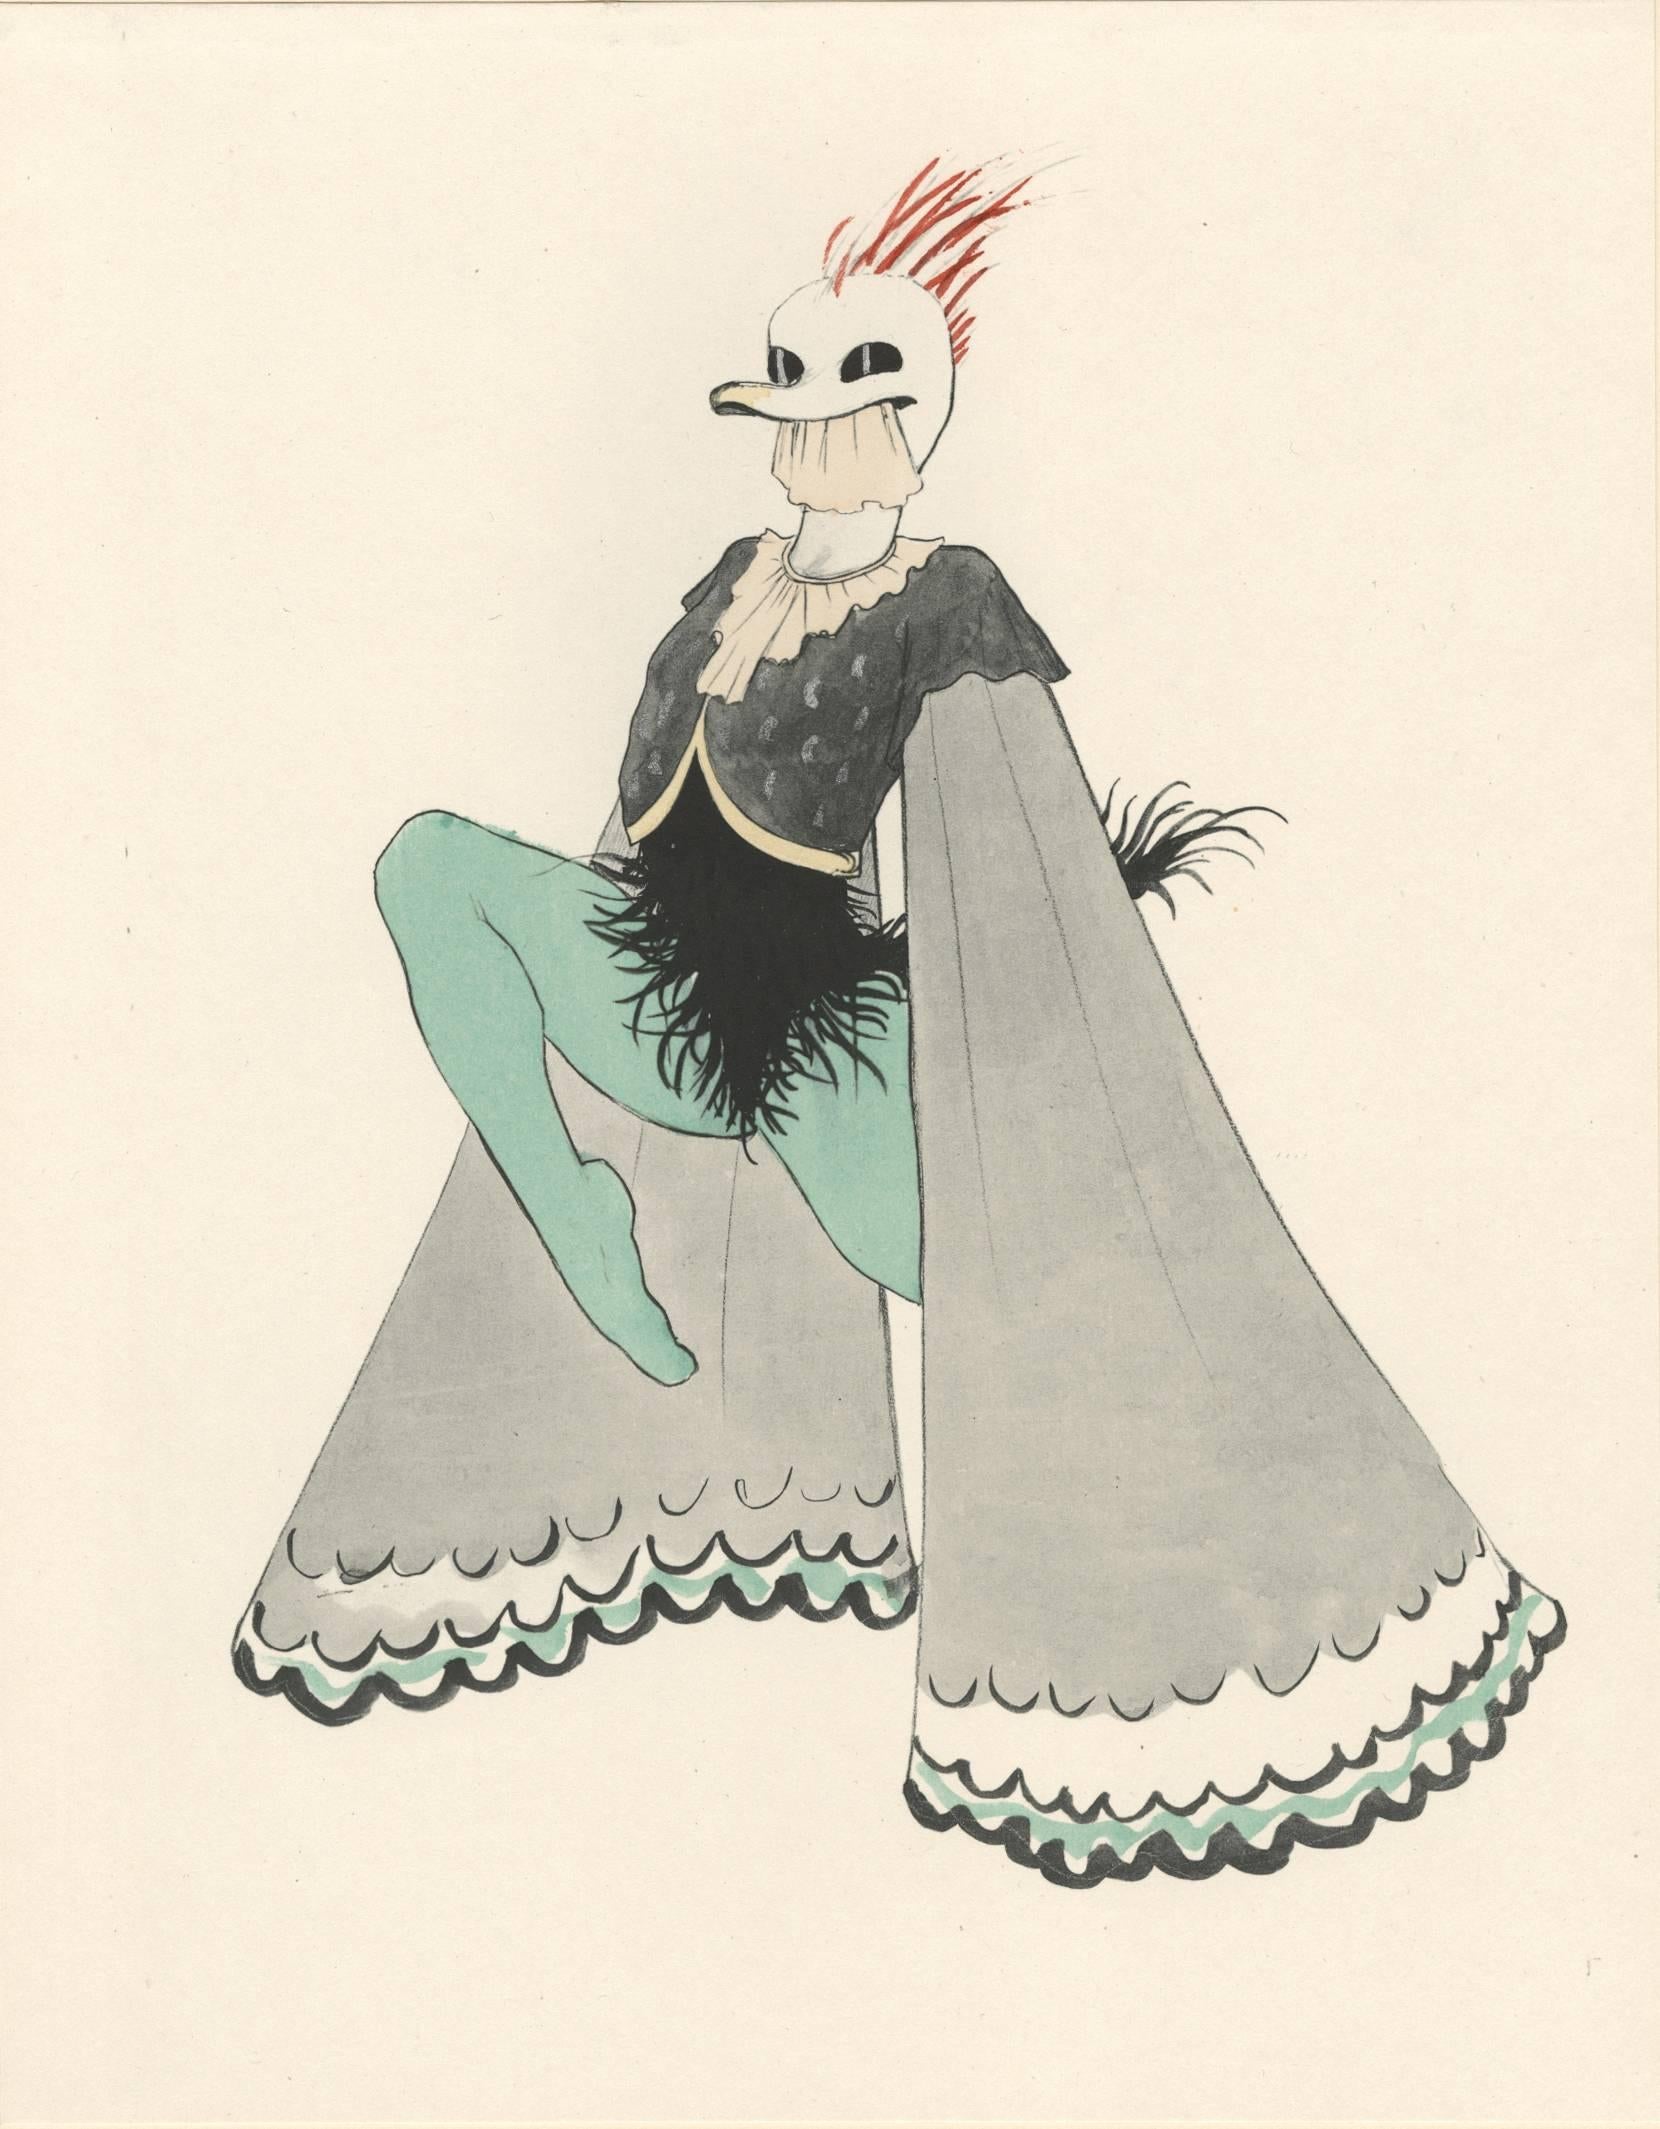 Walter Schnackenberg Figurative Print - Ballet und Pantomime "Spukgestalt" (Ghostly Figure), plate #12.